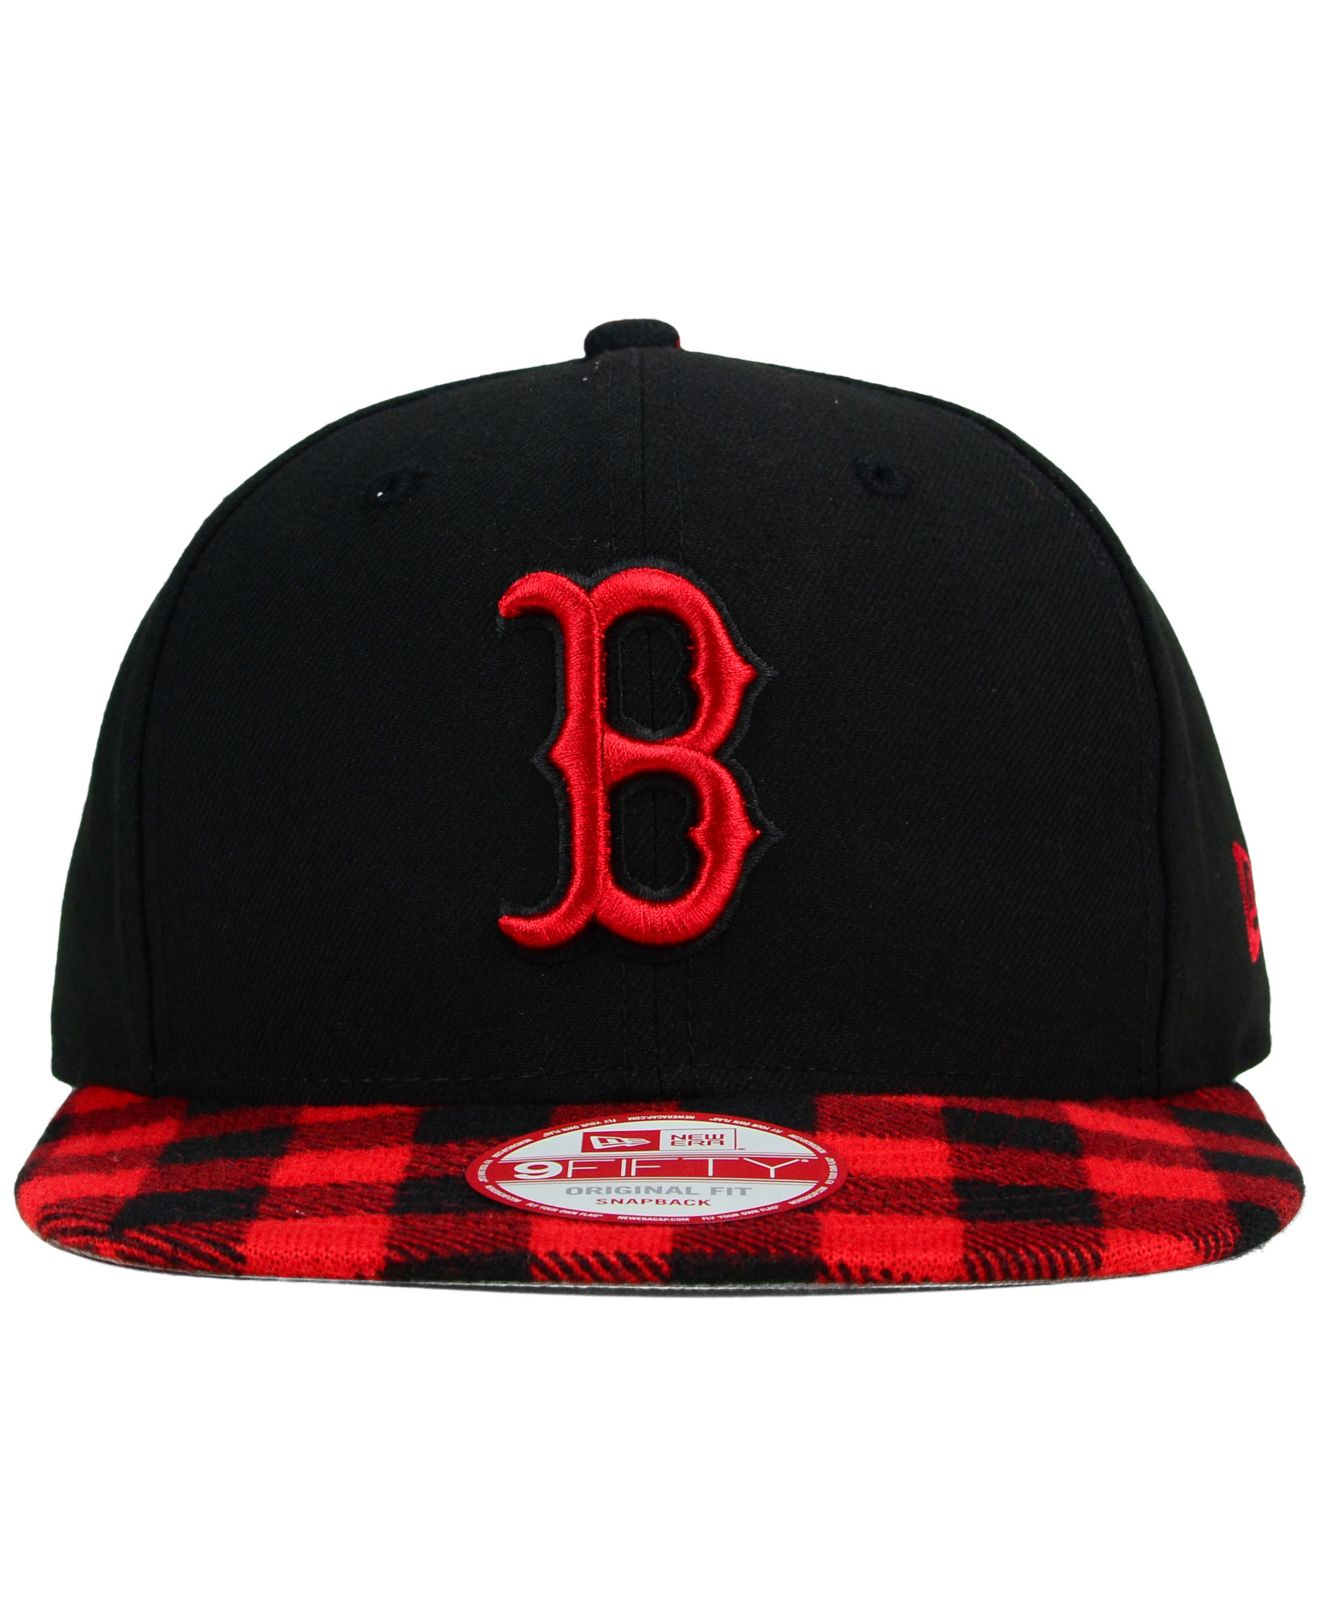 boston red sox gay pride hat